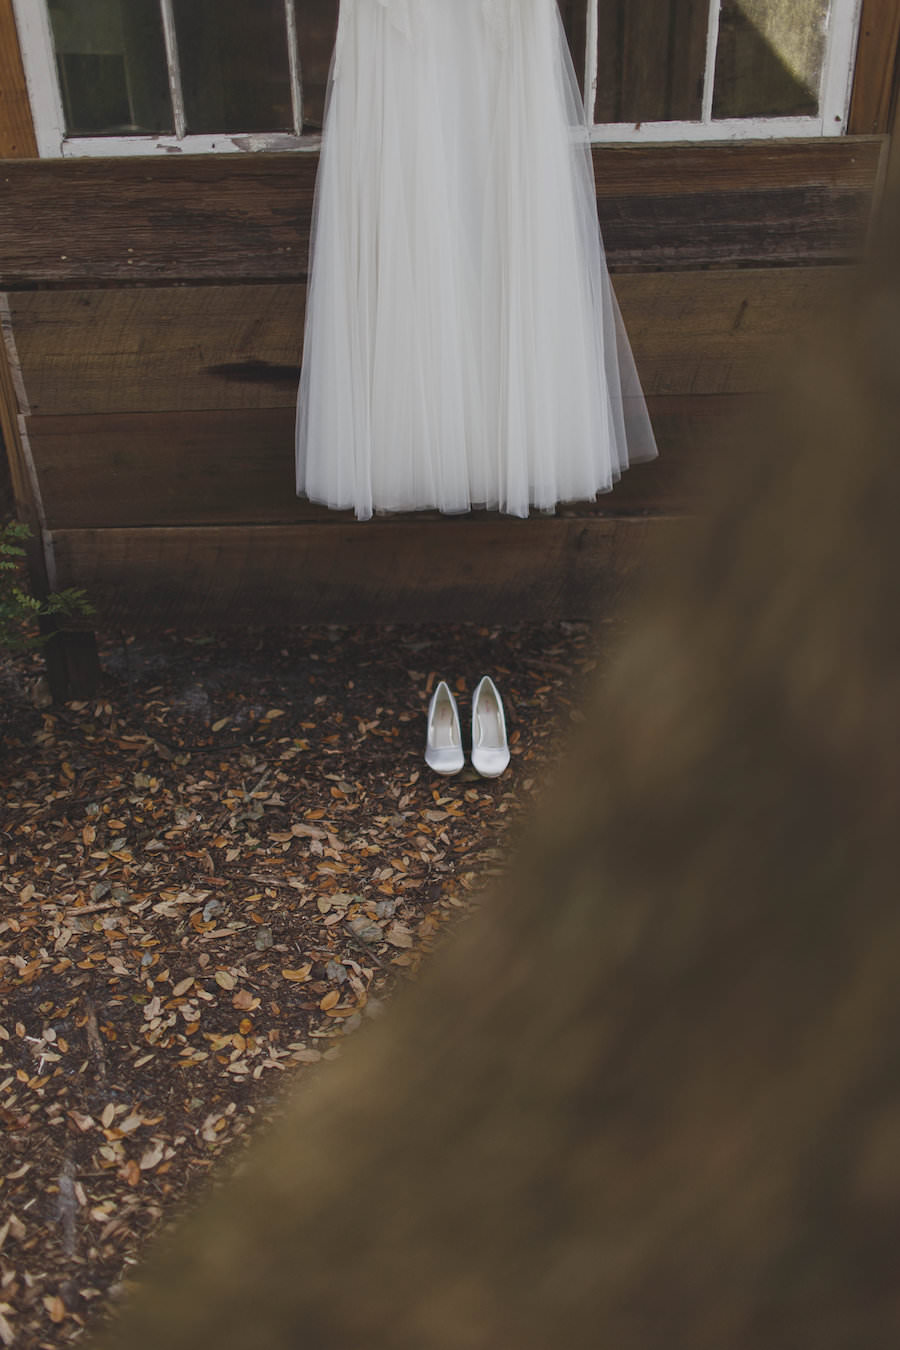 Ivory Anna Kara Wedding Dress and Ivory Bridal Wedding Shoes for Rustic Outdoor Wedding